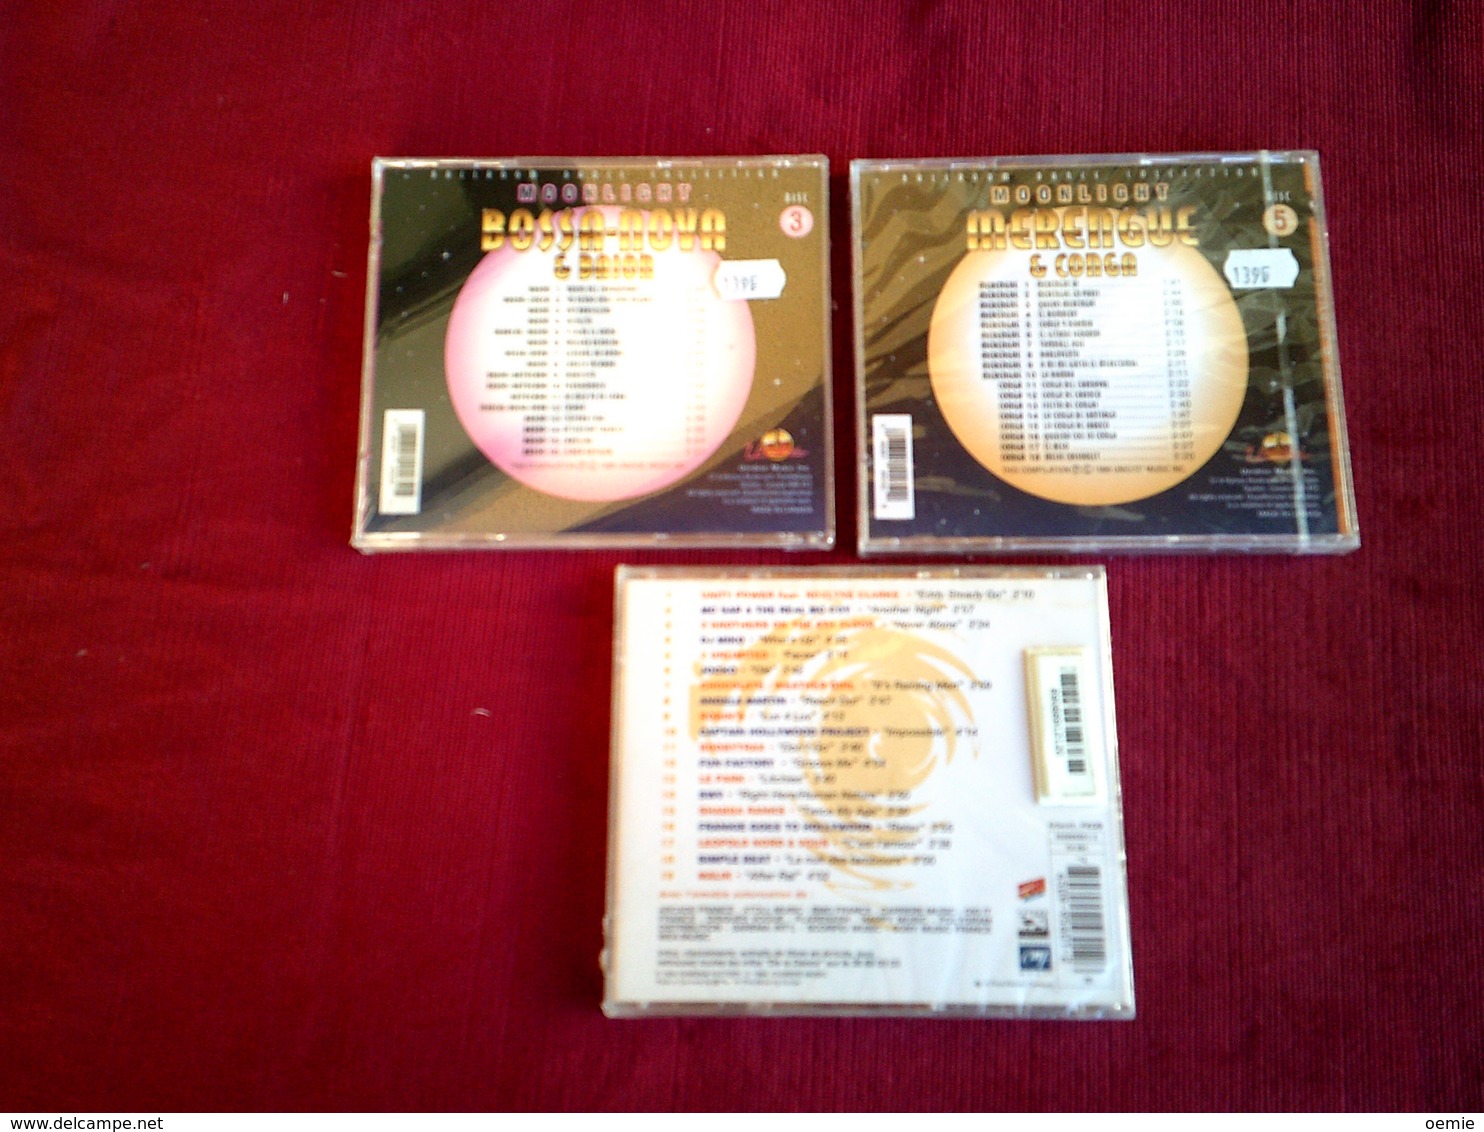 COLLECTION DE 3 CD ALBUMS  DE COMPILATION ° 19 TUBES DANCE MASTERS + MOONLIGHT VOL 3 BOSSA NOVA + VOL 5 MERENGUE é CONGA - Vollständige Sammlungen